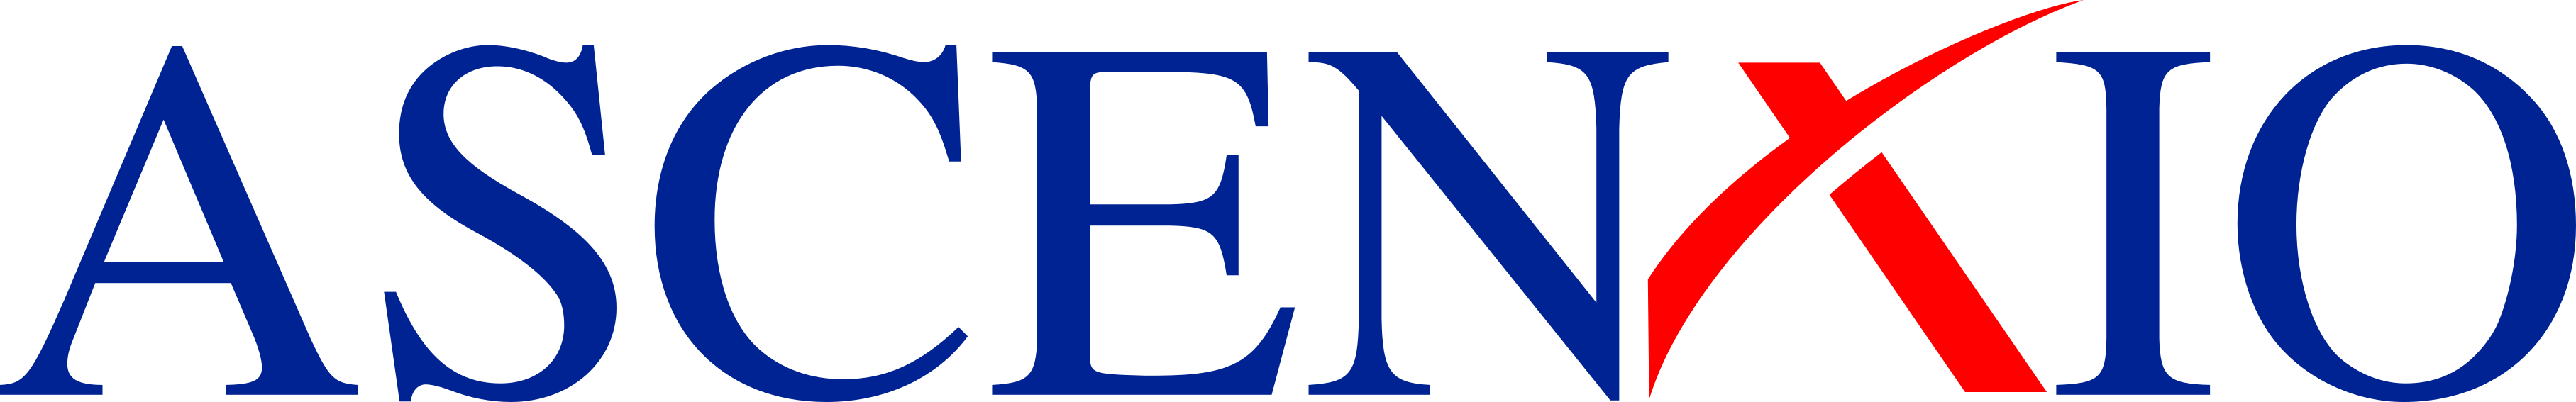 Company logo for Ascenxio Financial Pte. Ltd.